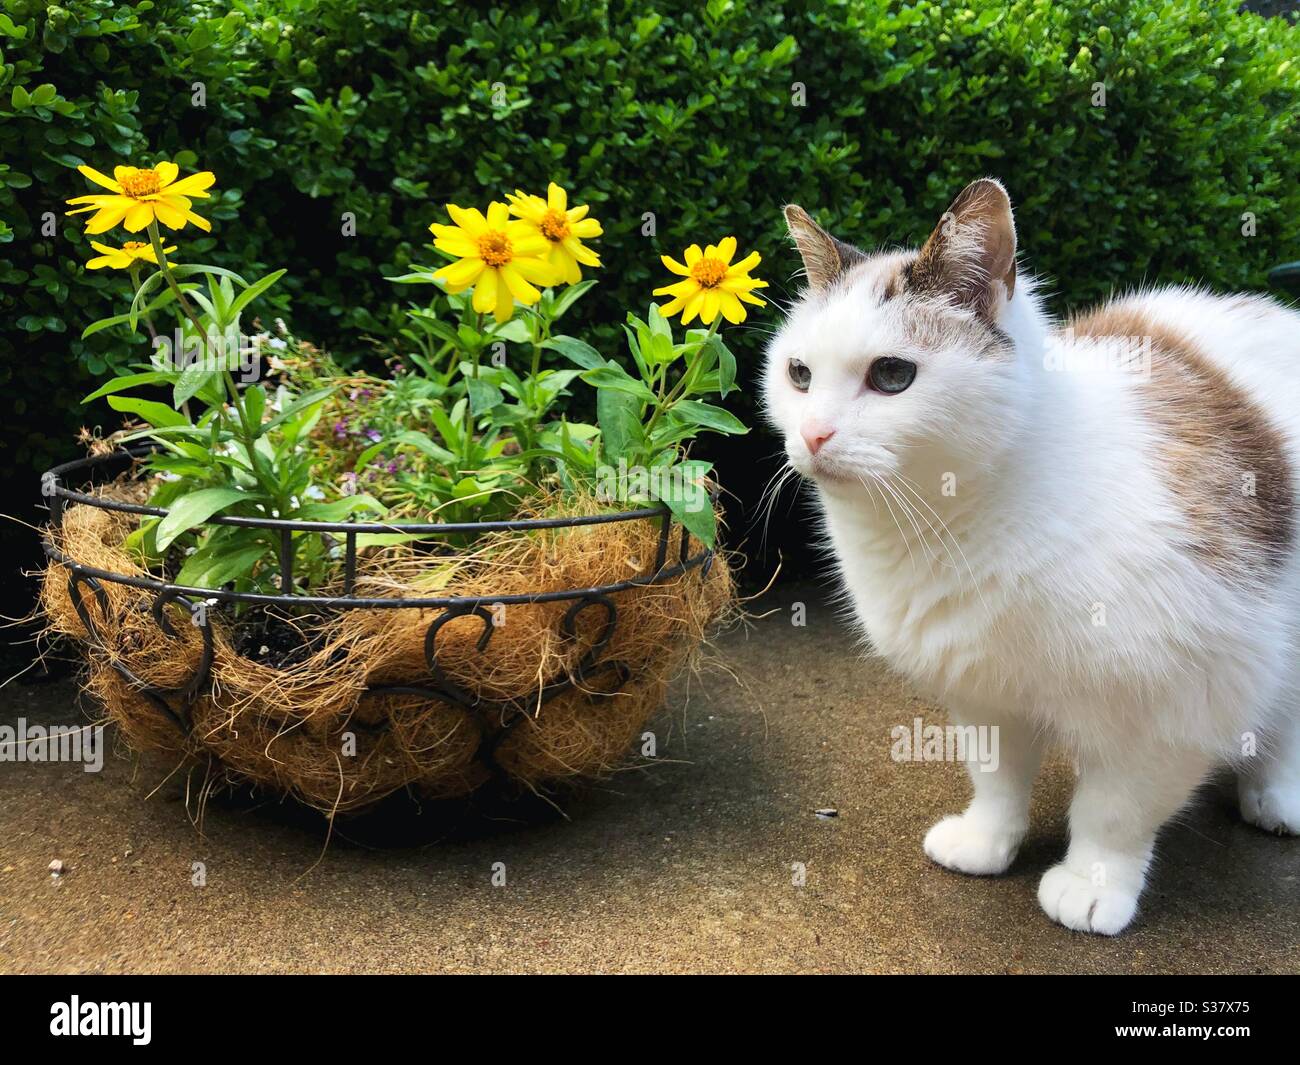 A cat next to zinnia flowers. Stock Photo